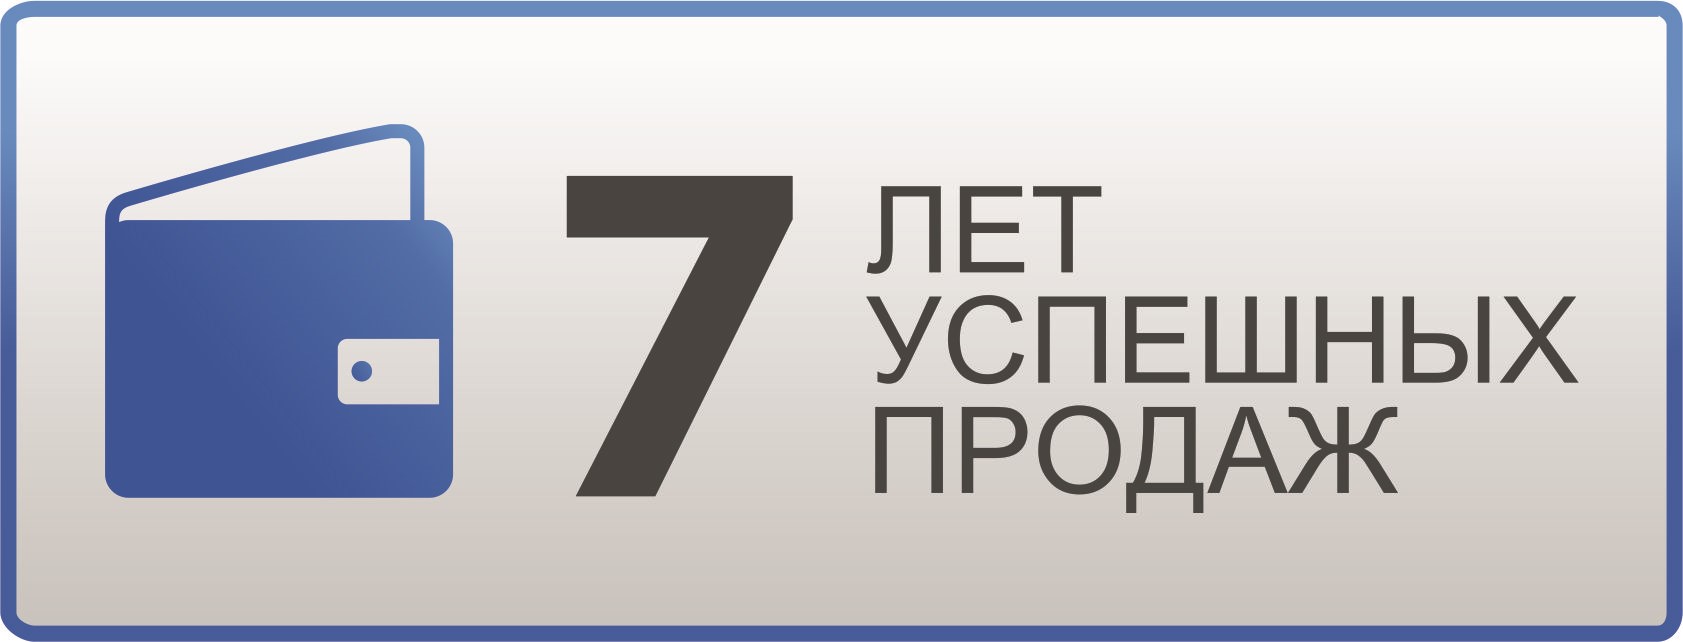 🔥 Yandex Plus Maximum Amediateka 6 months 🔥 0